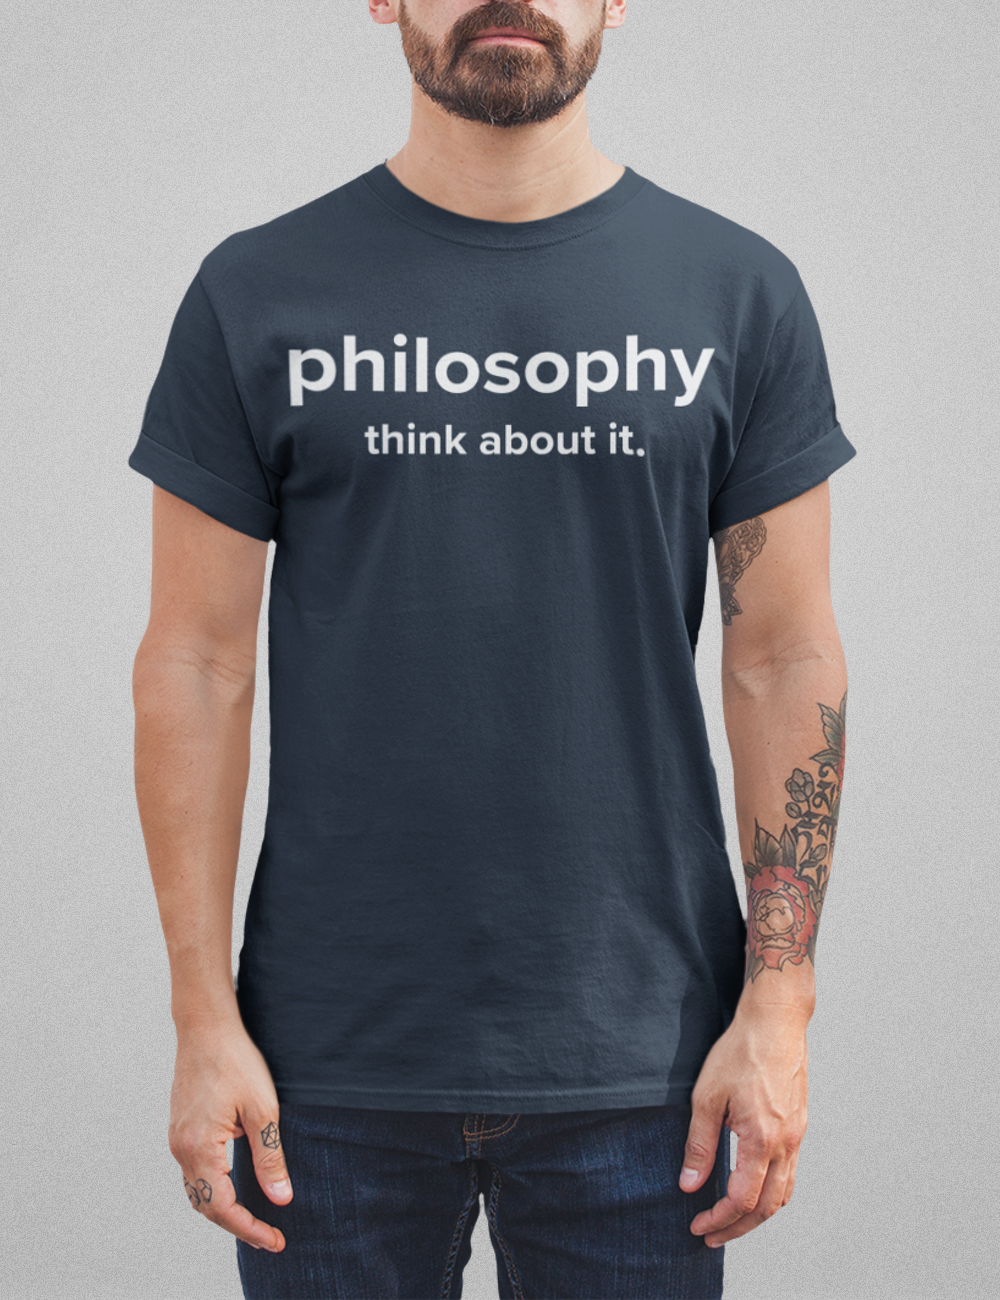 Philosophy (Think About It) Men's Classic T-Shirt OniTakai